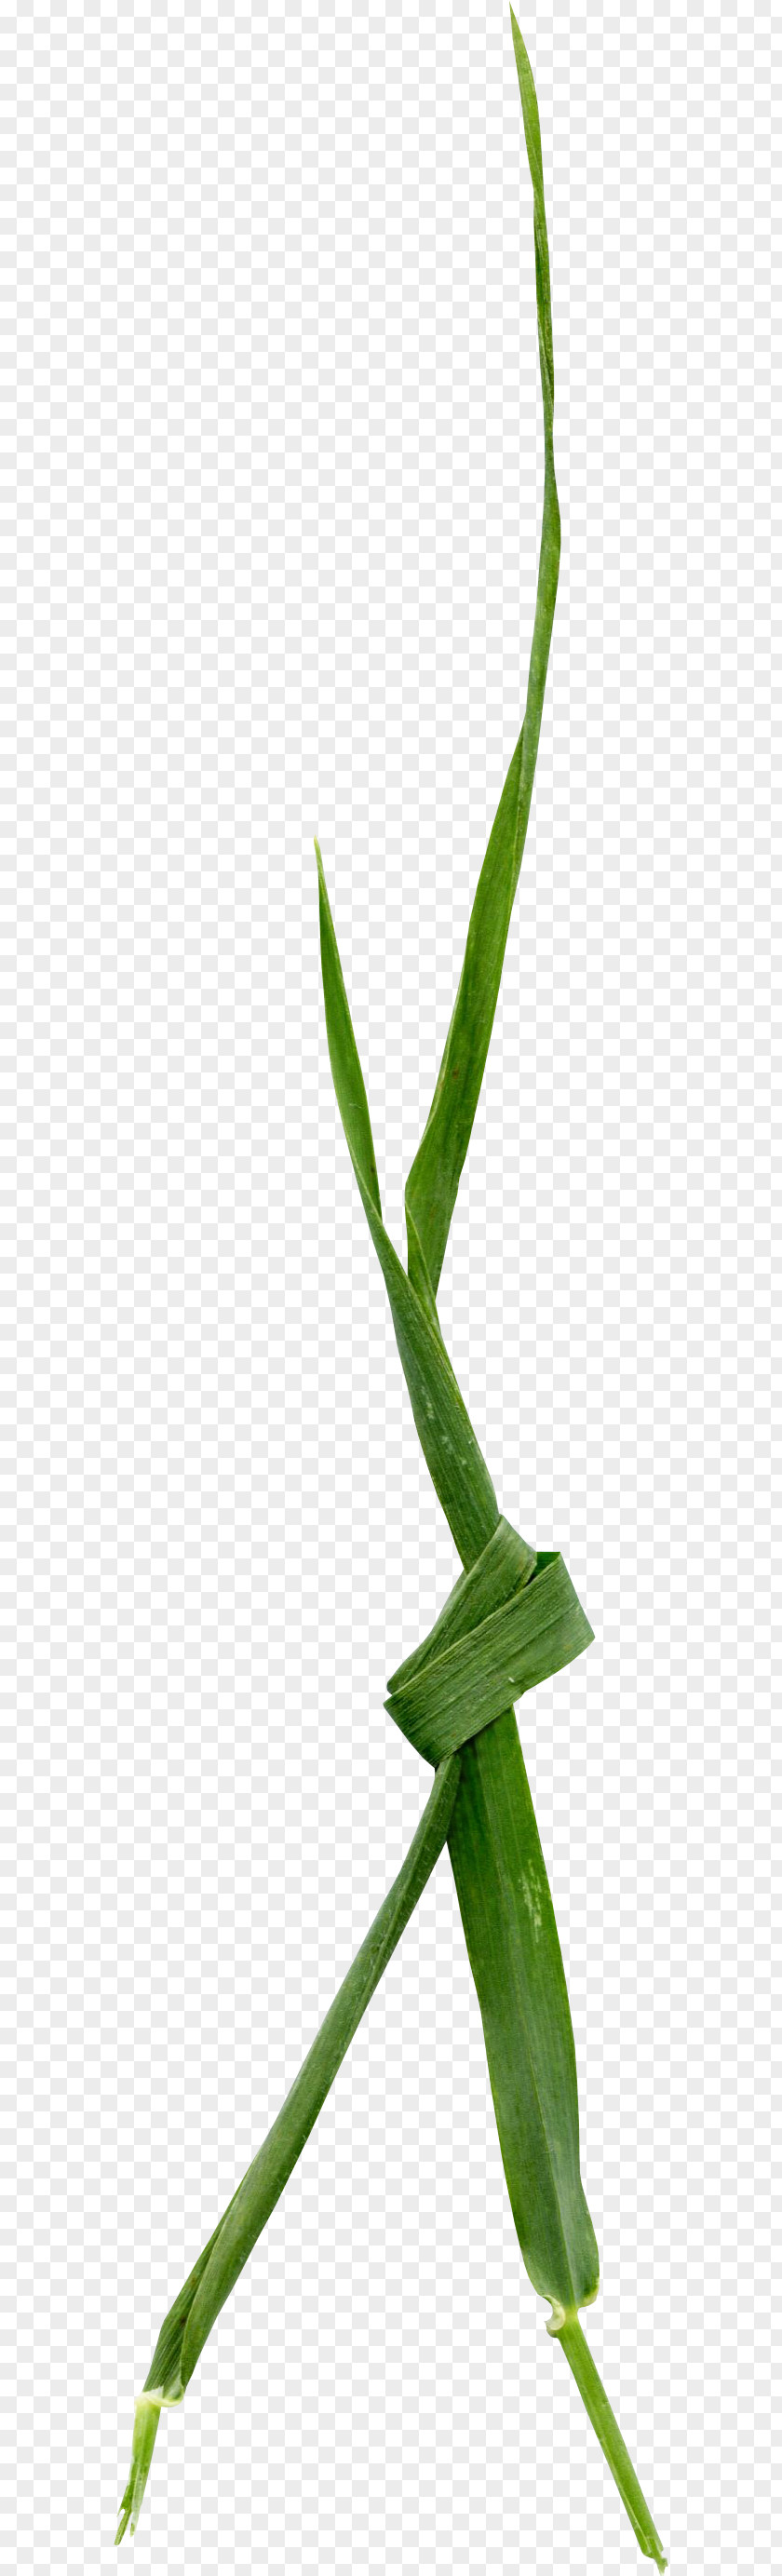 Green Leaf Tie Bar Grasses Plant Stem Close-up Aloe Vera PNG